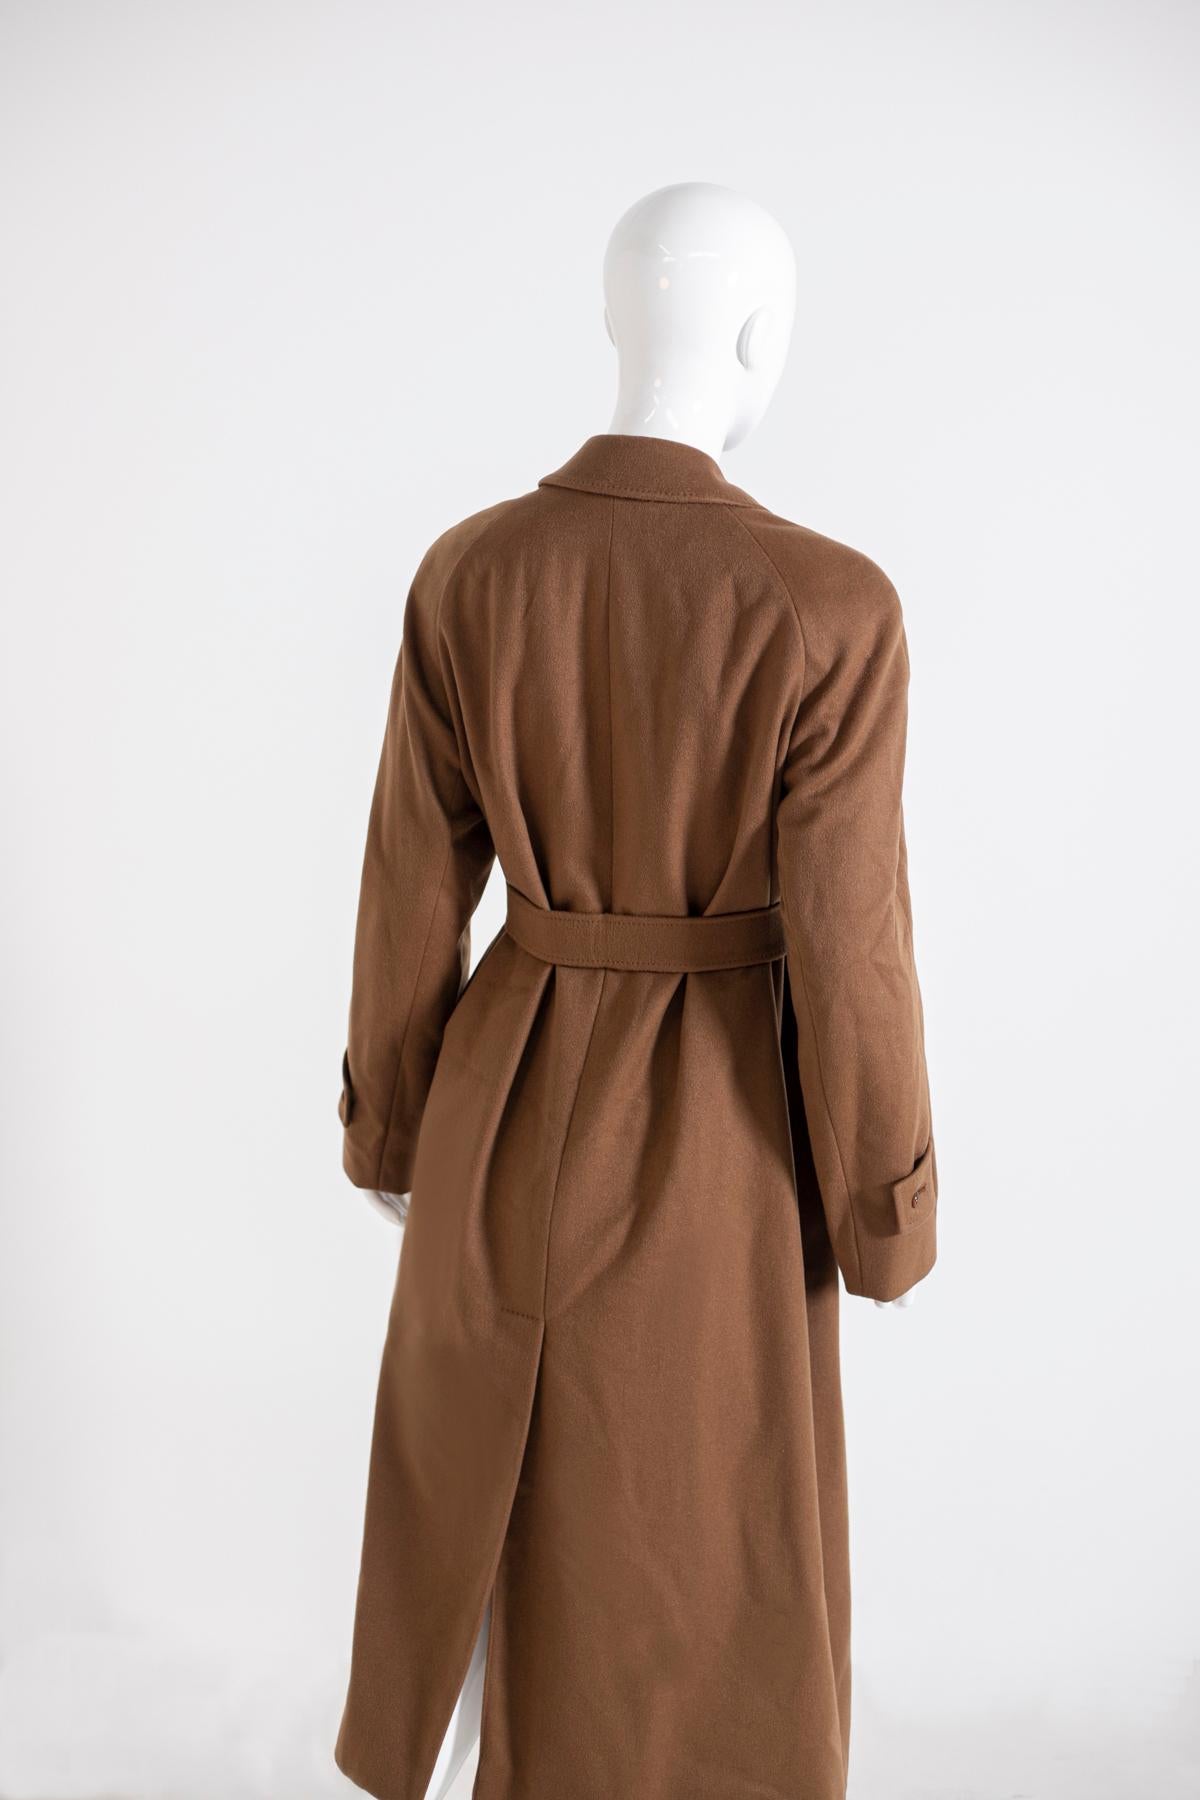 Aquascutum Women's Coat 1990s Brown-Colored For Sale 2